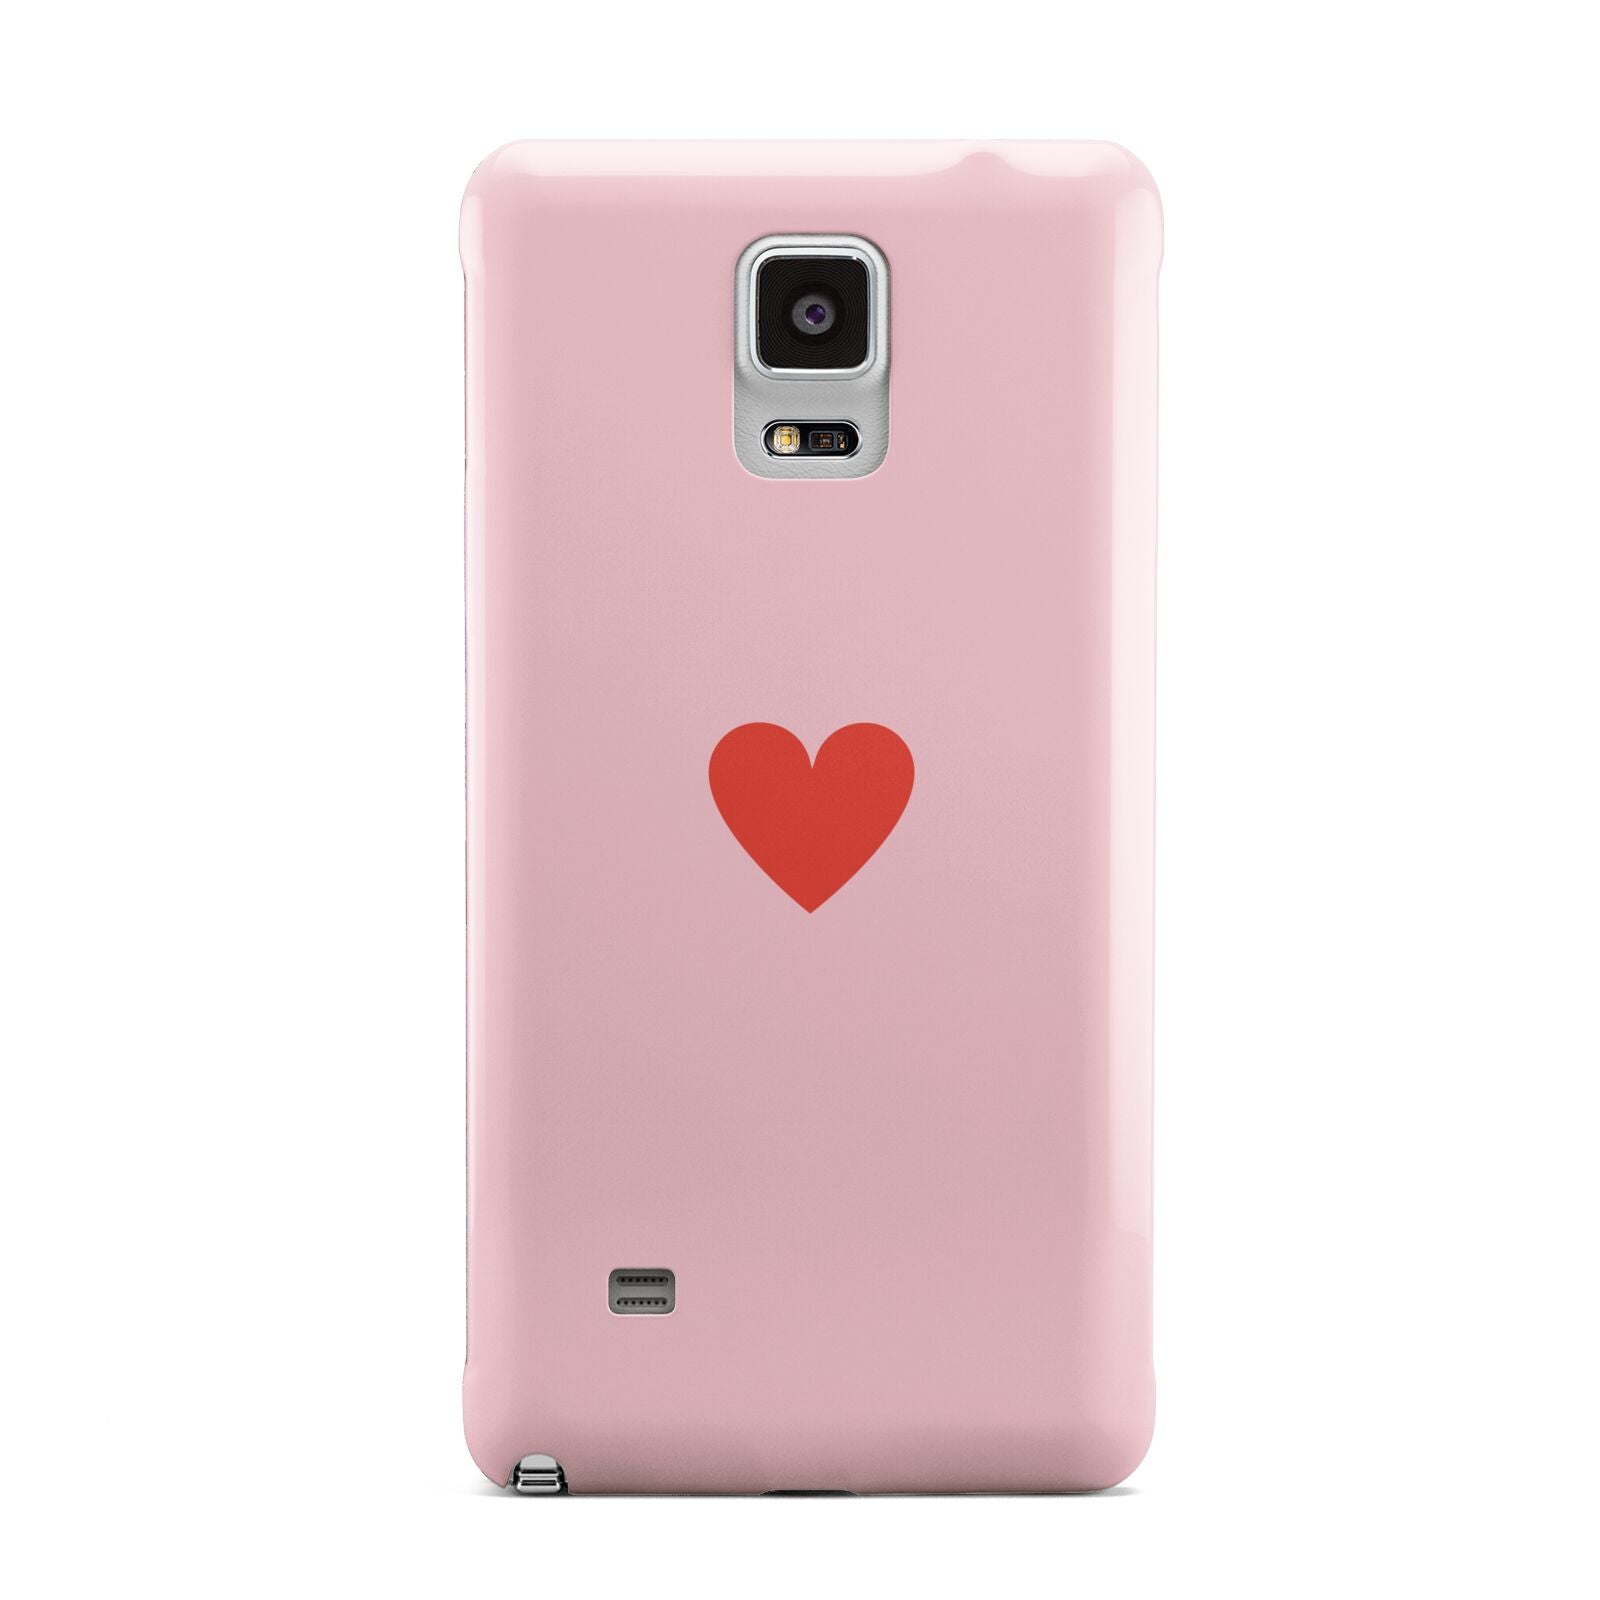 Red Heart Samsung Galaxy Note 4 Case